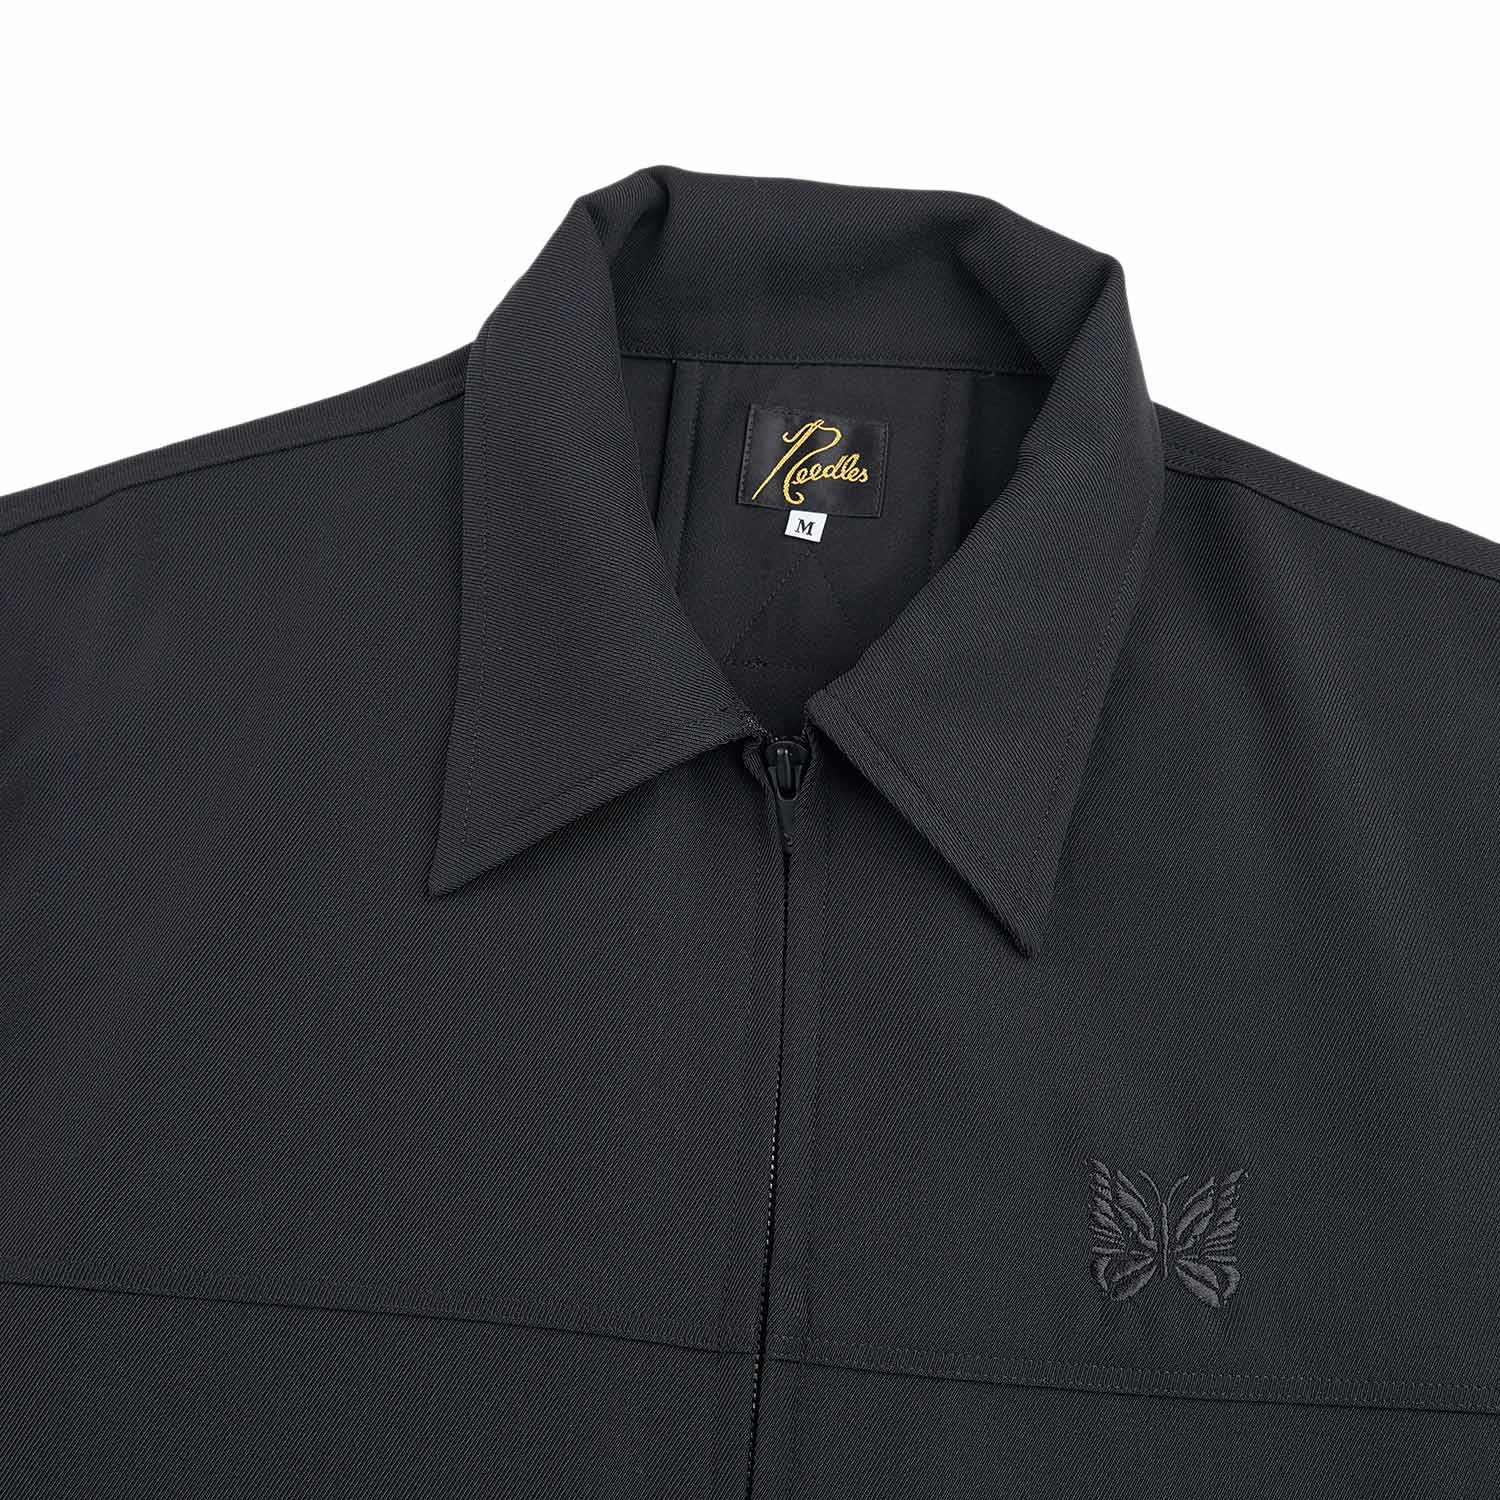 needles sport twill jacket (black) NS152-C - a.plus store